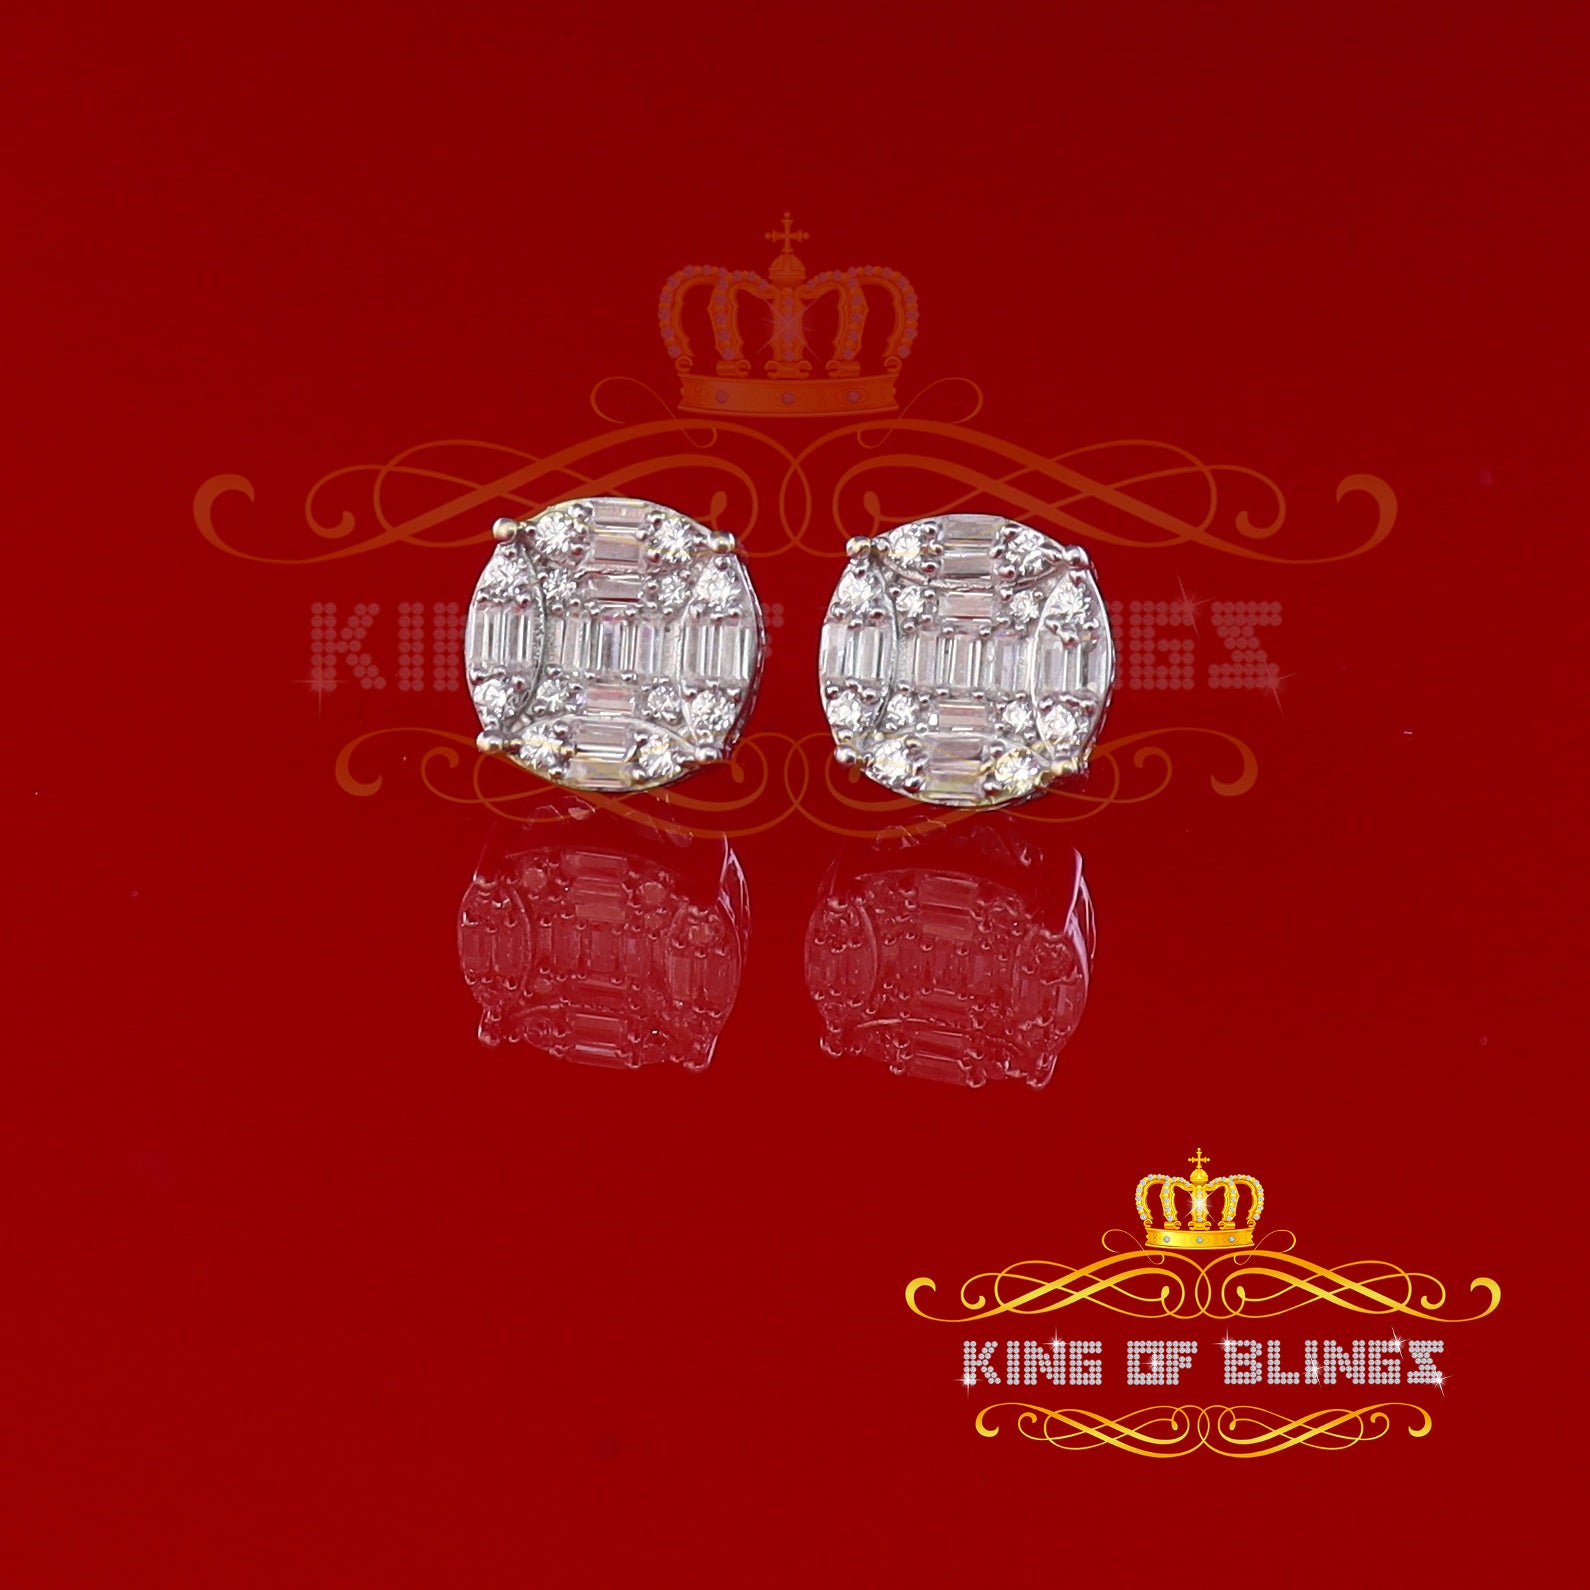 King of Blings- 925 Silver Real 1.02ct Cubic Zirconia Round White Earrings For Men's & Women's KING OF BLINGS